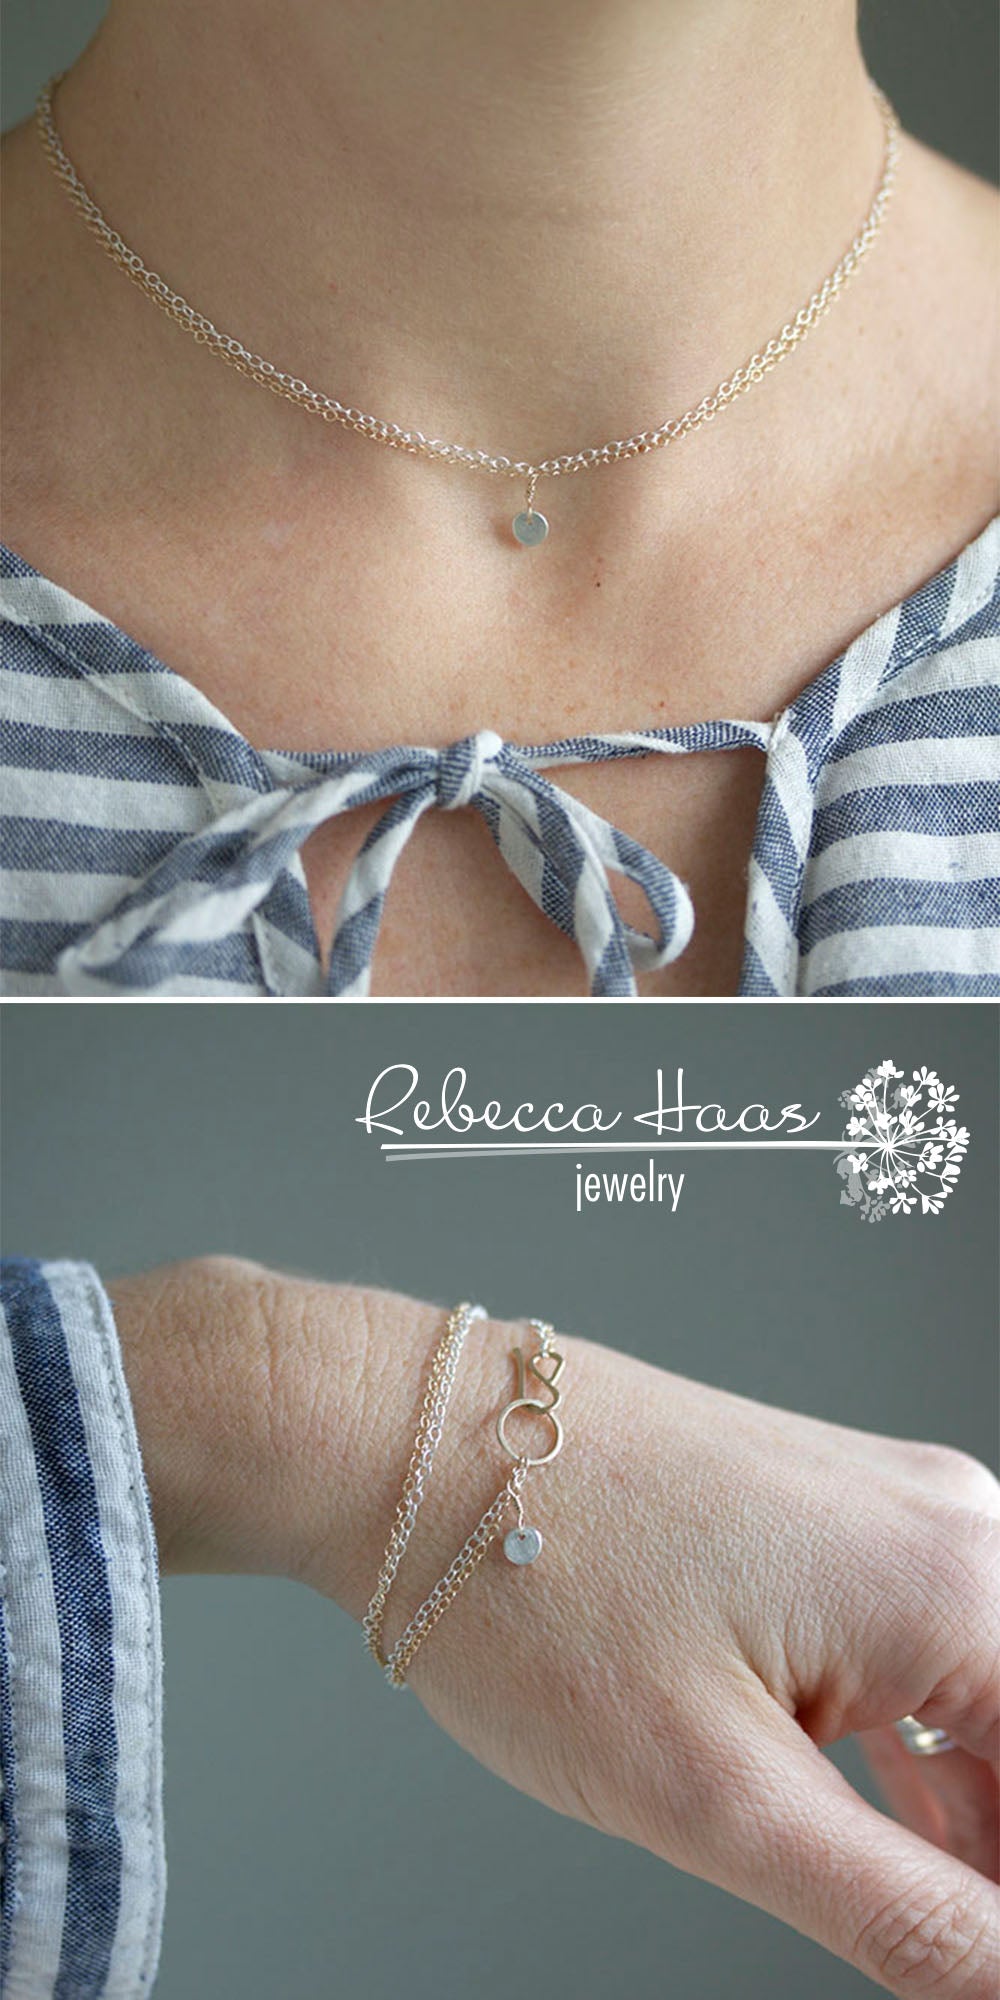 Rebecca Haas Jewelry - Minima Collage Blog